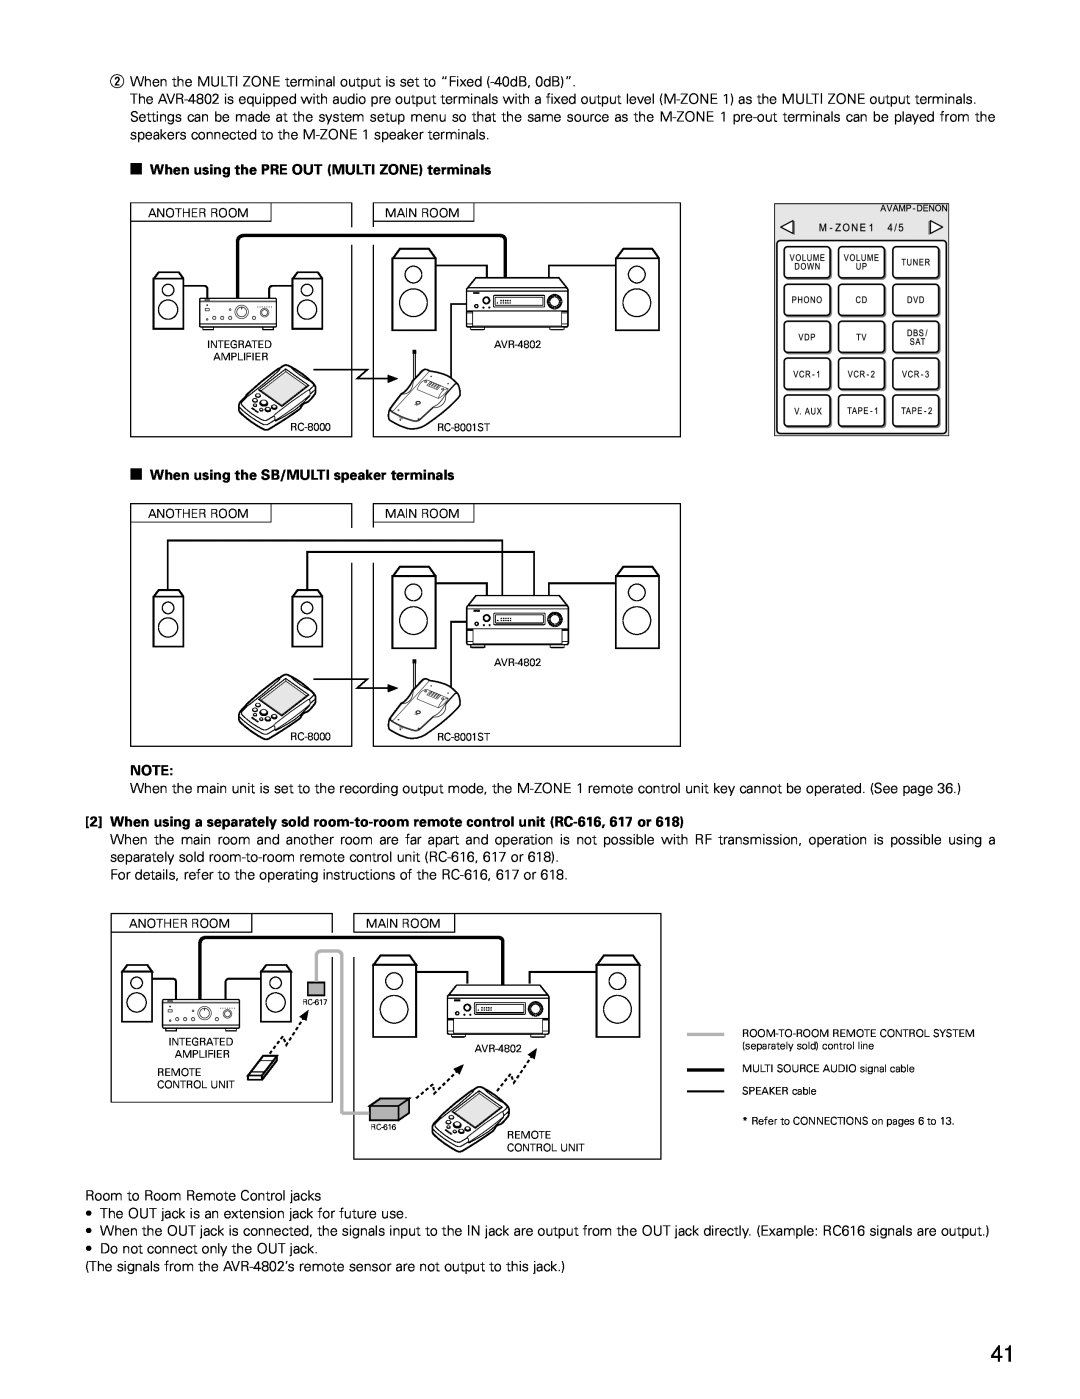 Denon AVR-4802 manual When using the PRE OUT MULTI ZONE terminals, 2When using the SB/MULTI speaker terminals 